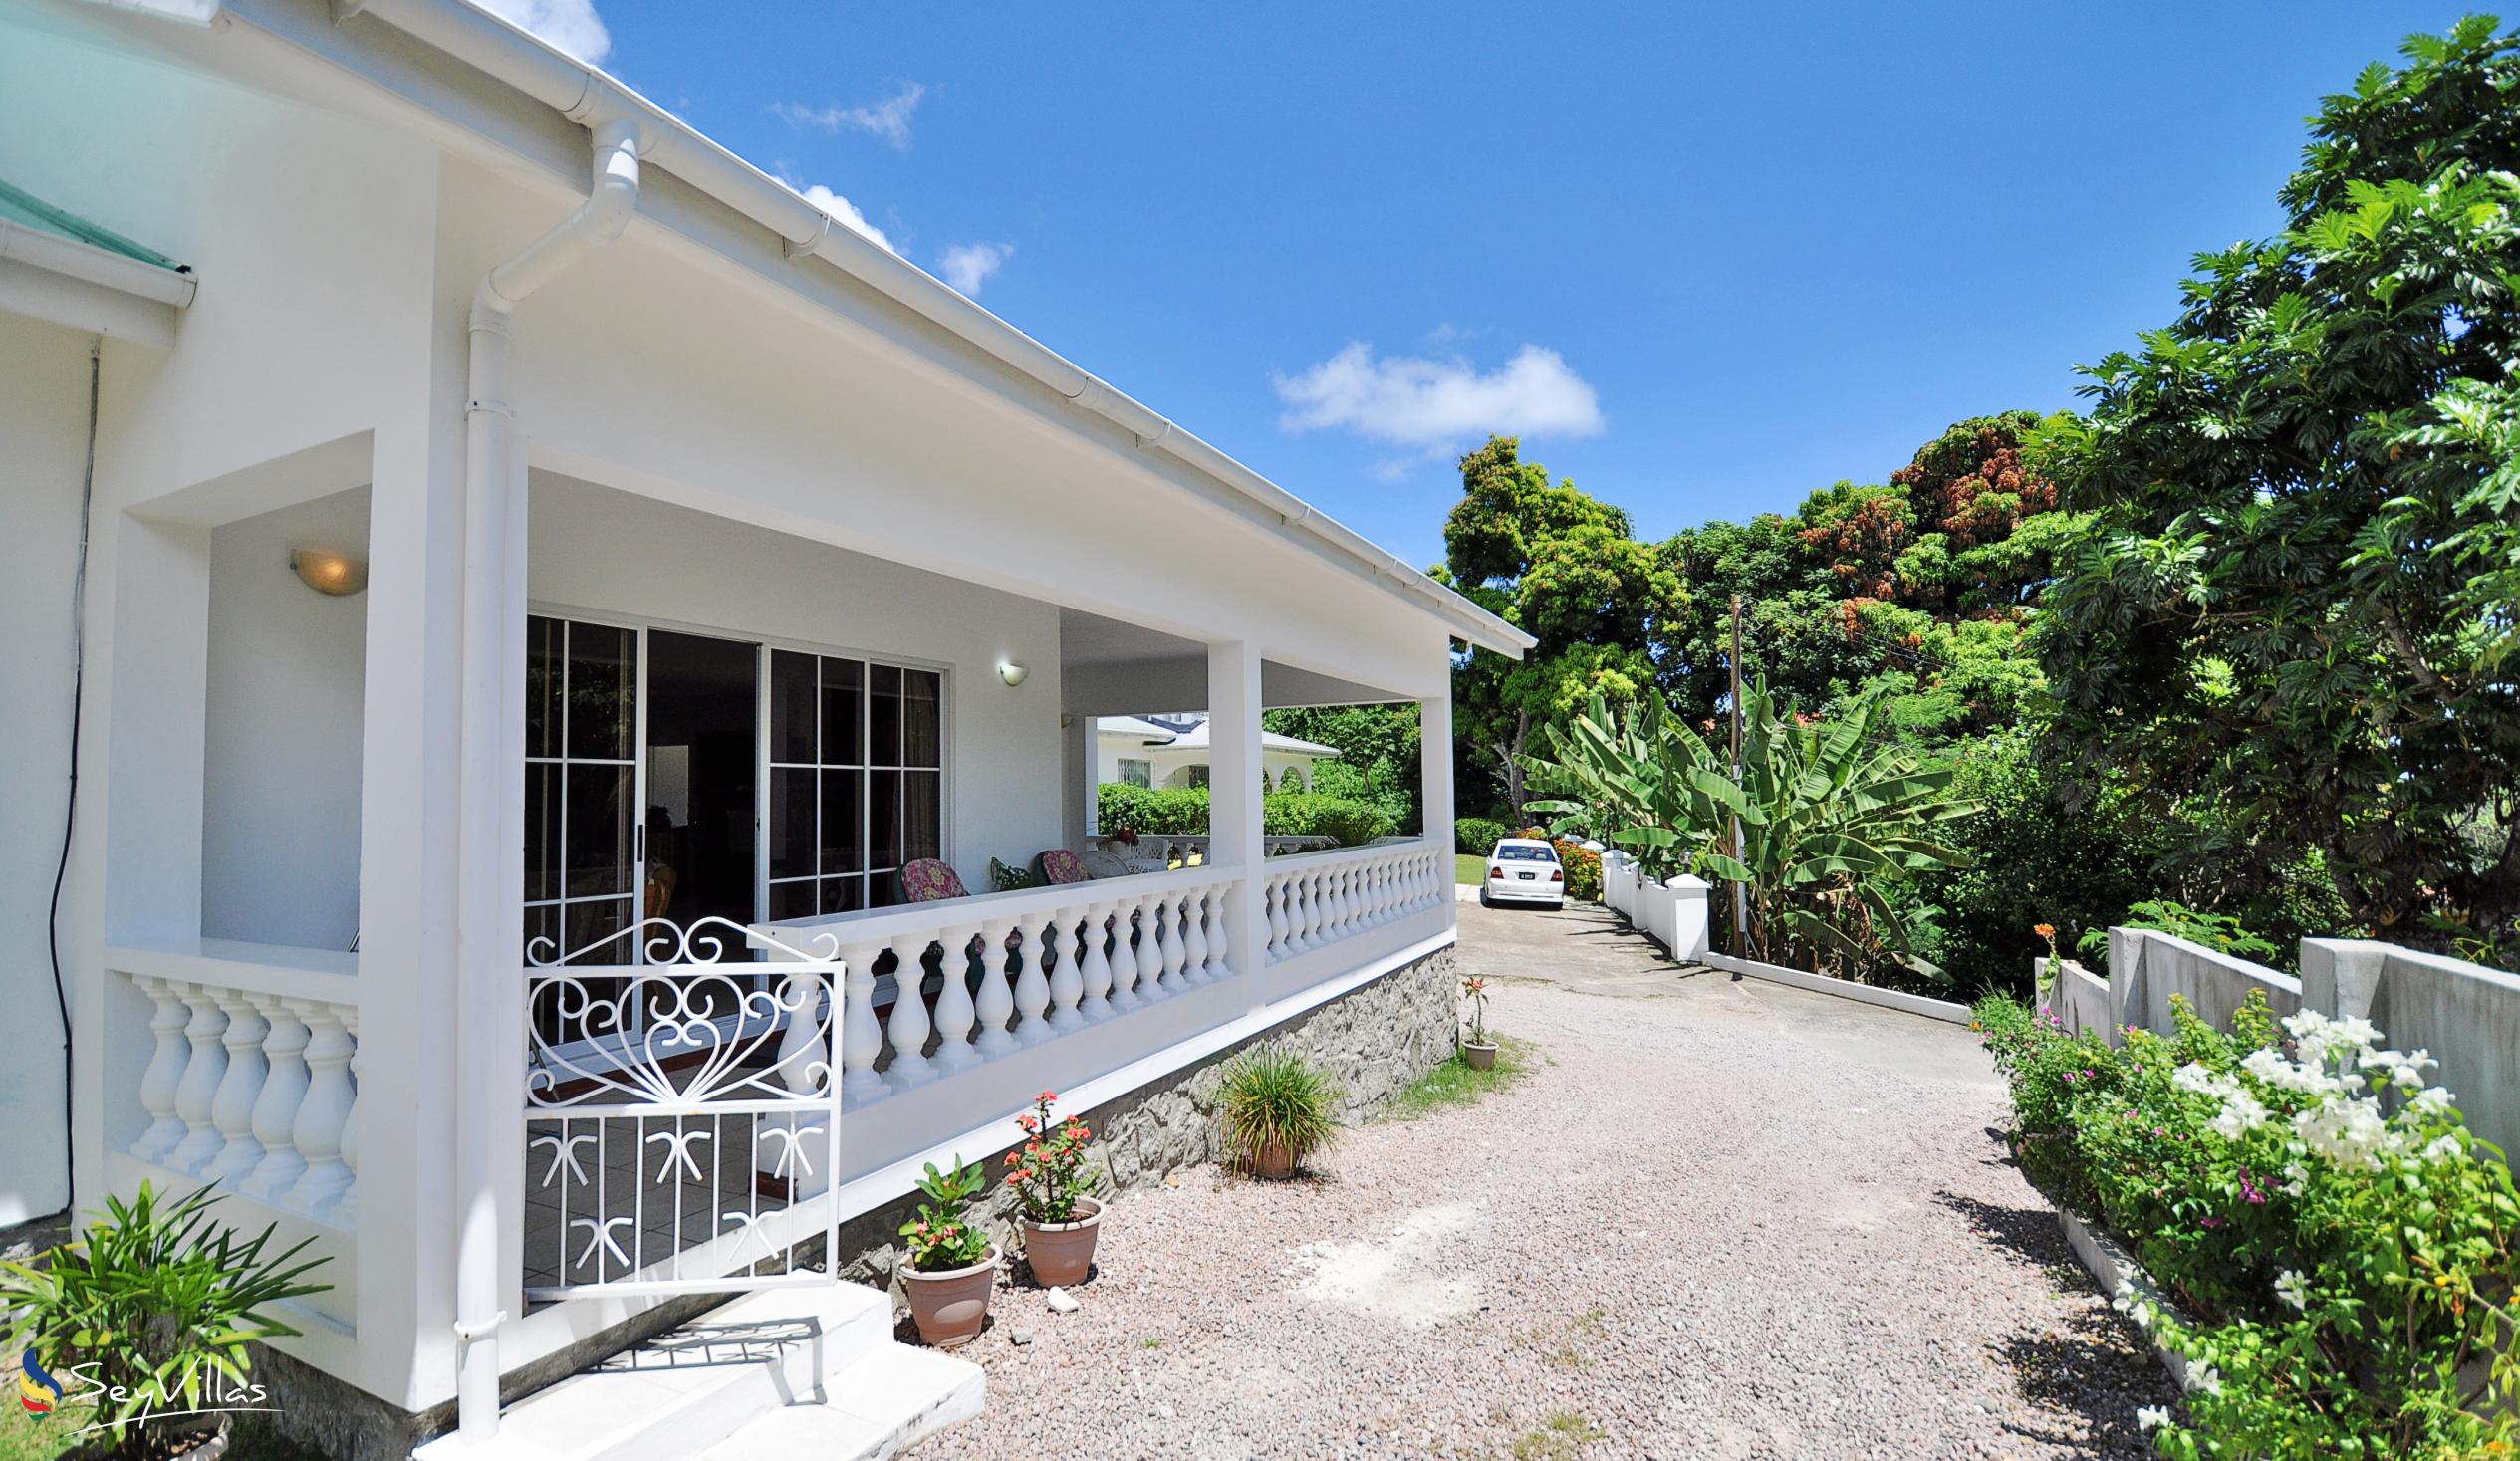 Photo 5: Row's Villa - Outdoor area - Mahé (Seychelles)